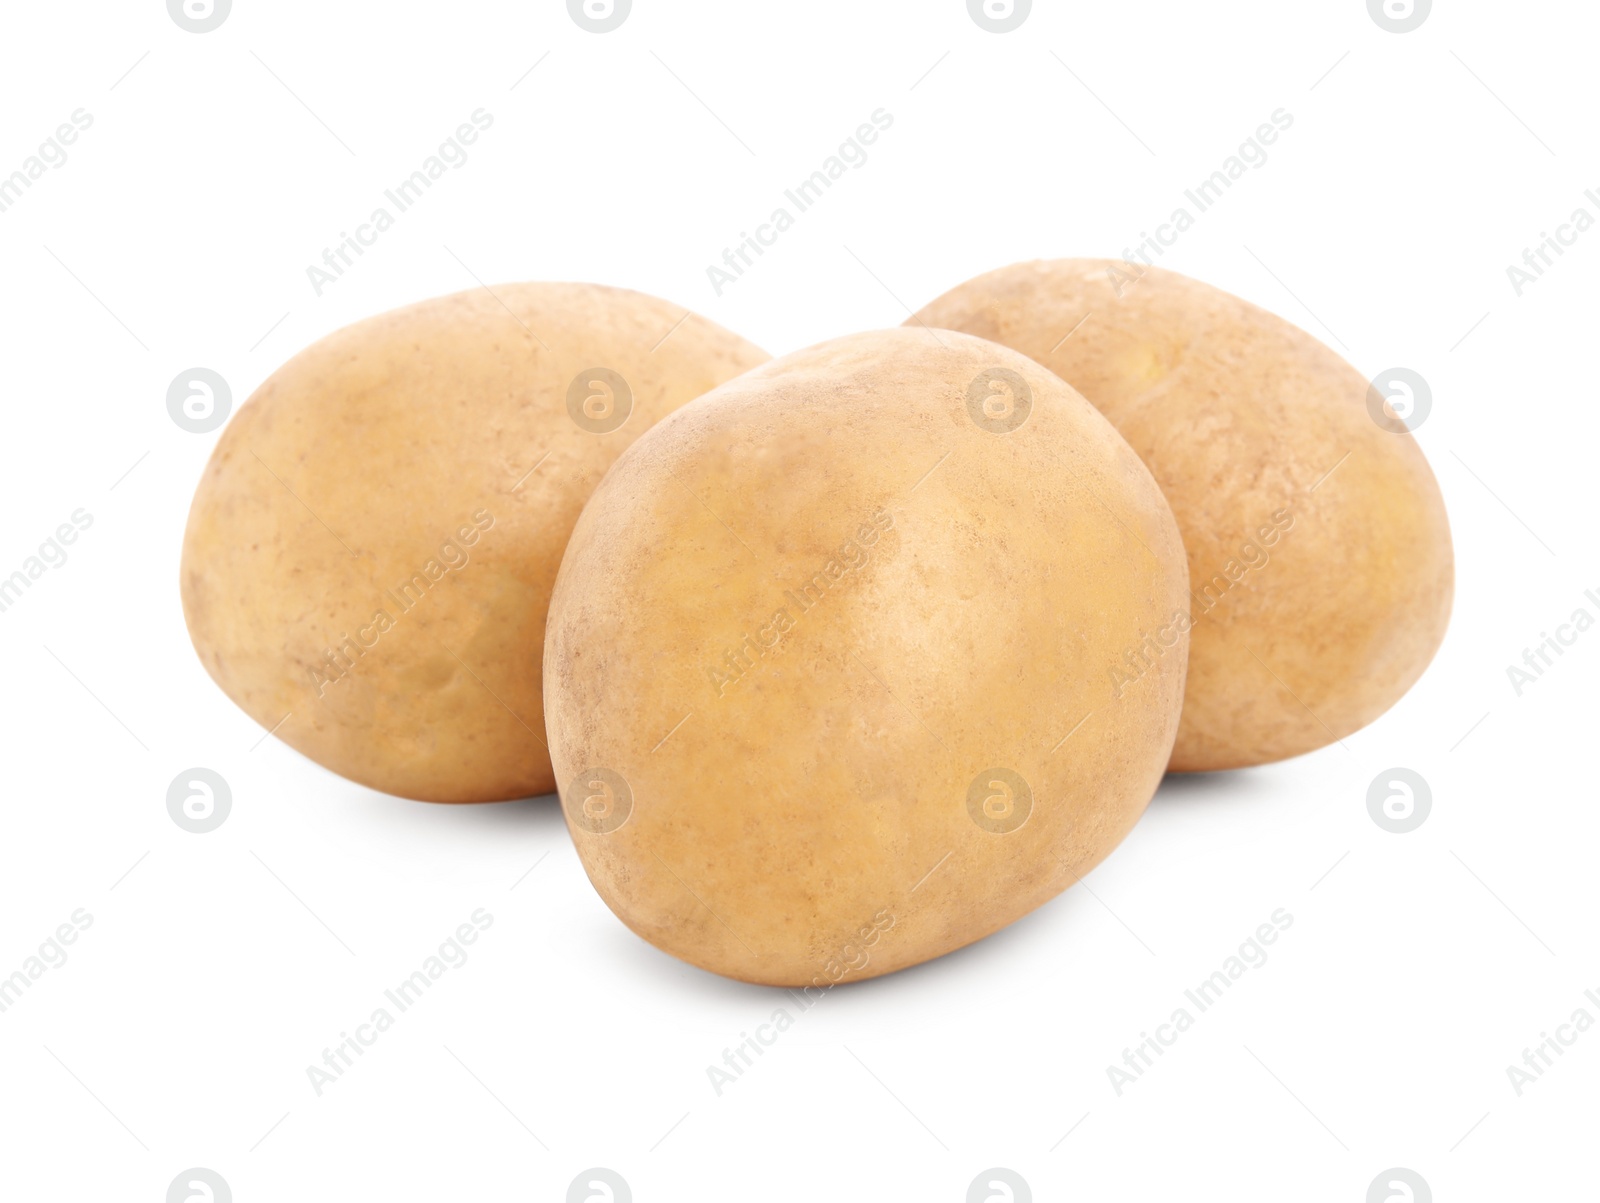 Photo of Tasty fresh organic potatoes on white background